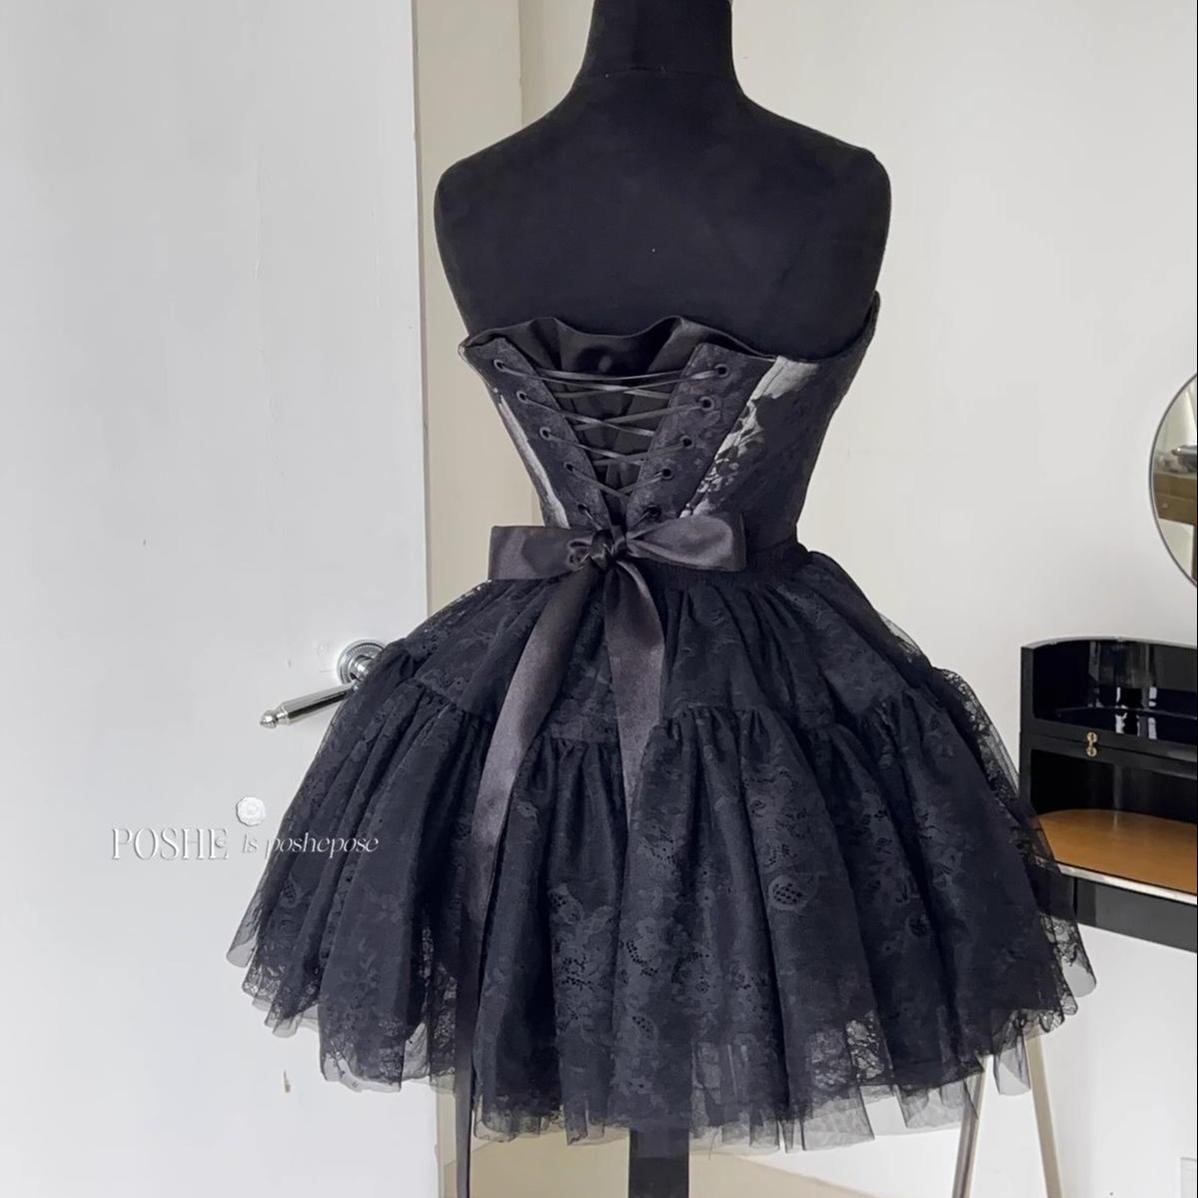 Lolita Dress Petticoat Puffy Black And White Pettipants 36386:542704